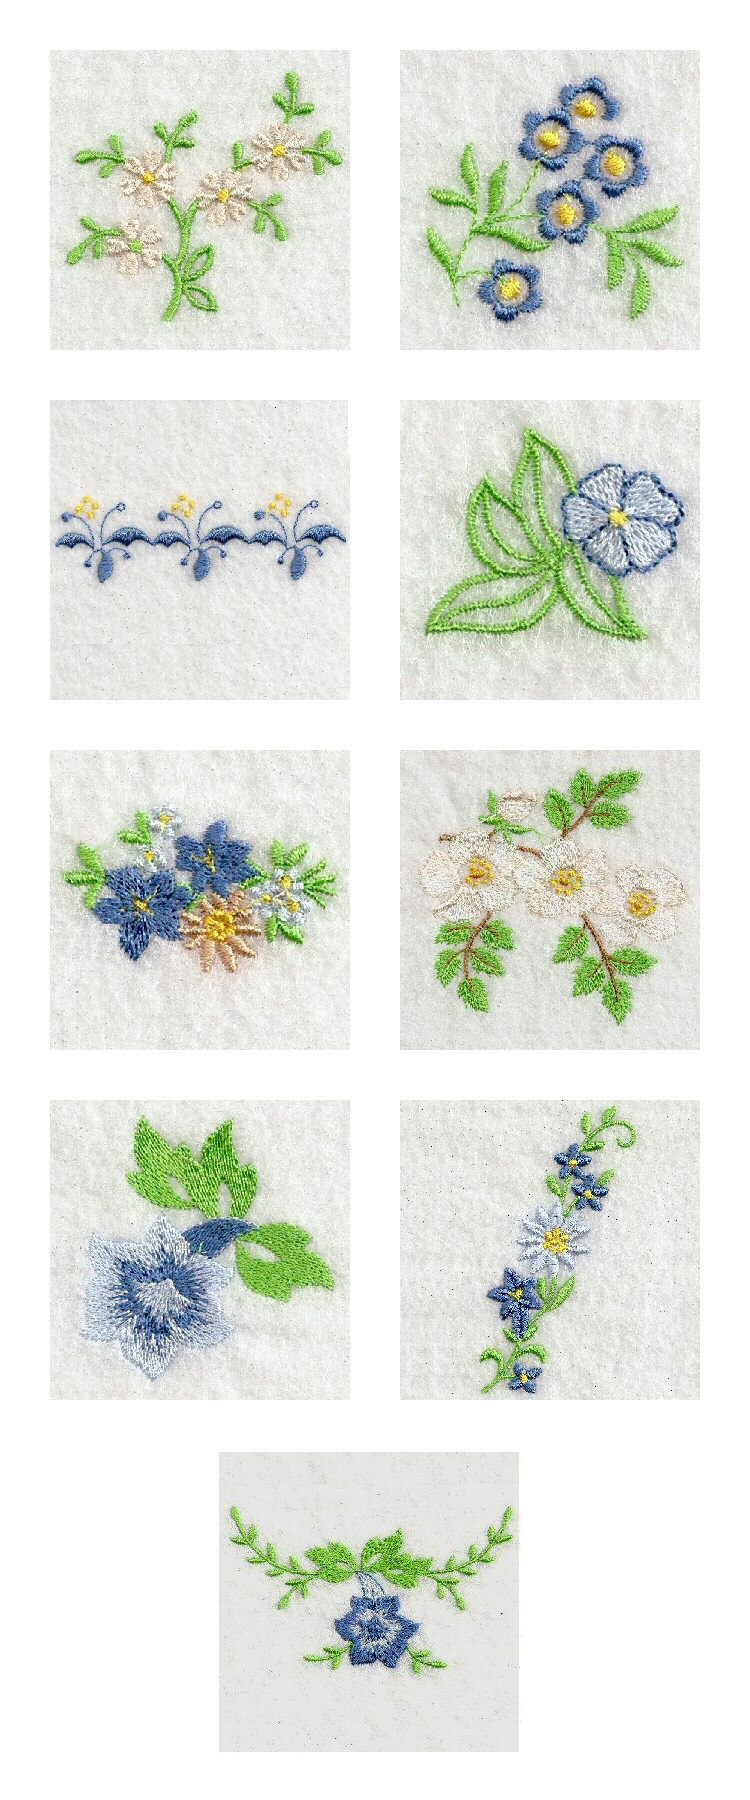 Delicate Florals Embroidery Machine Design Details